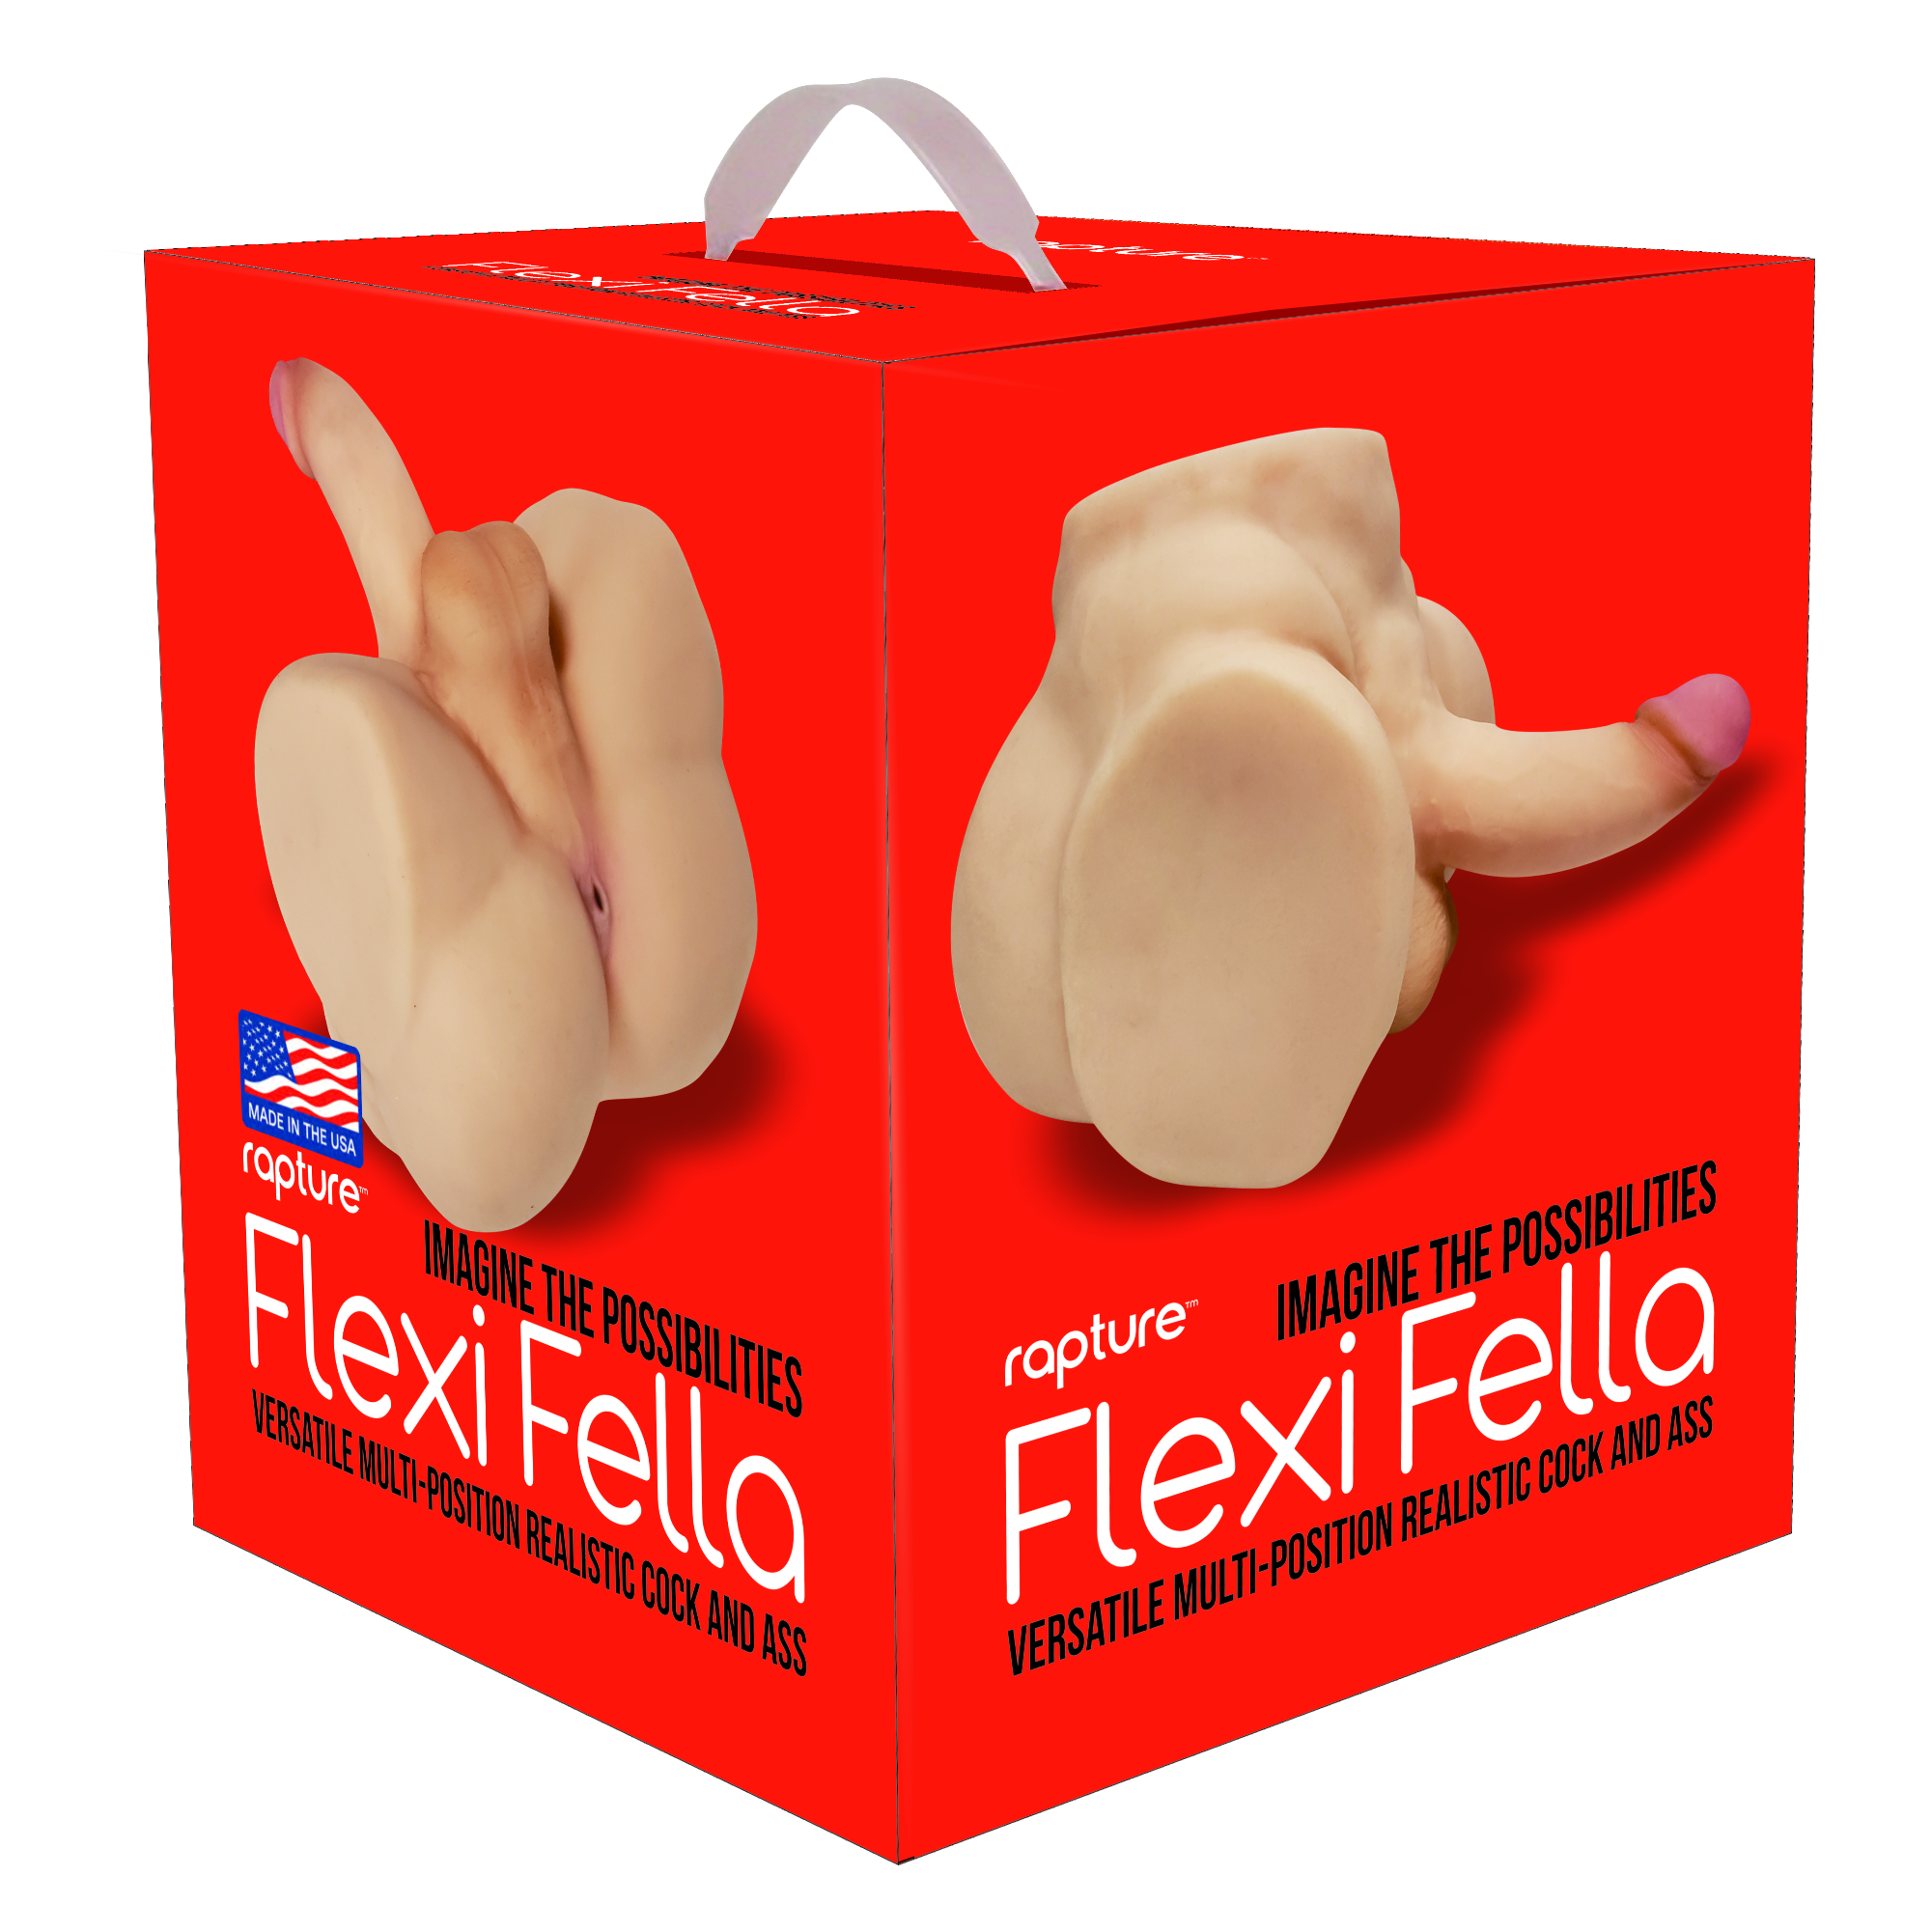 Rapture Flexi Fella Versatile Multi-Position Realistic Cock And Ass